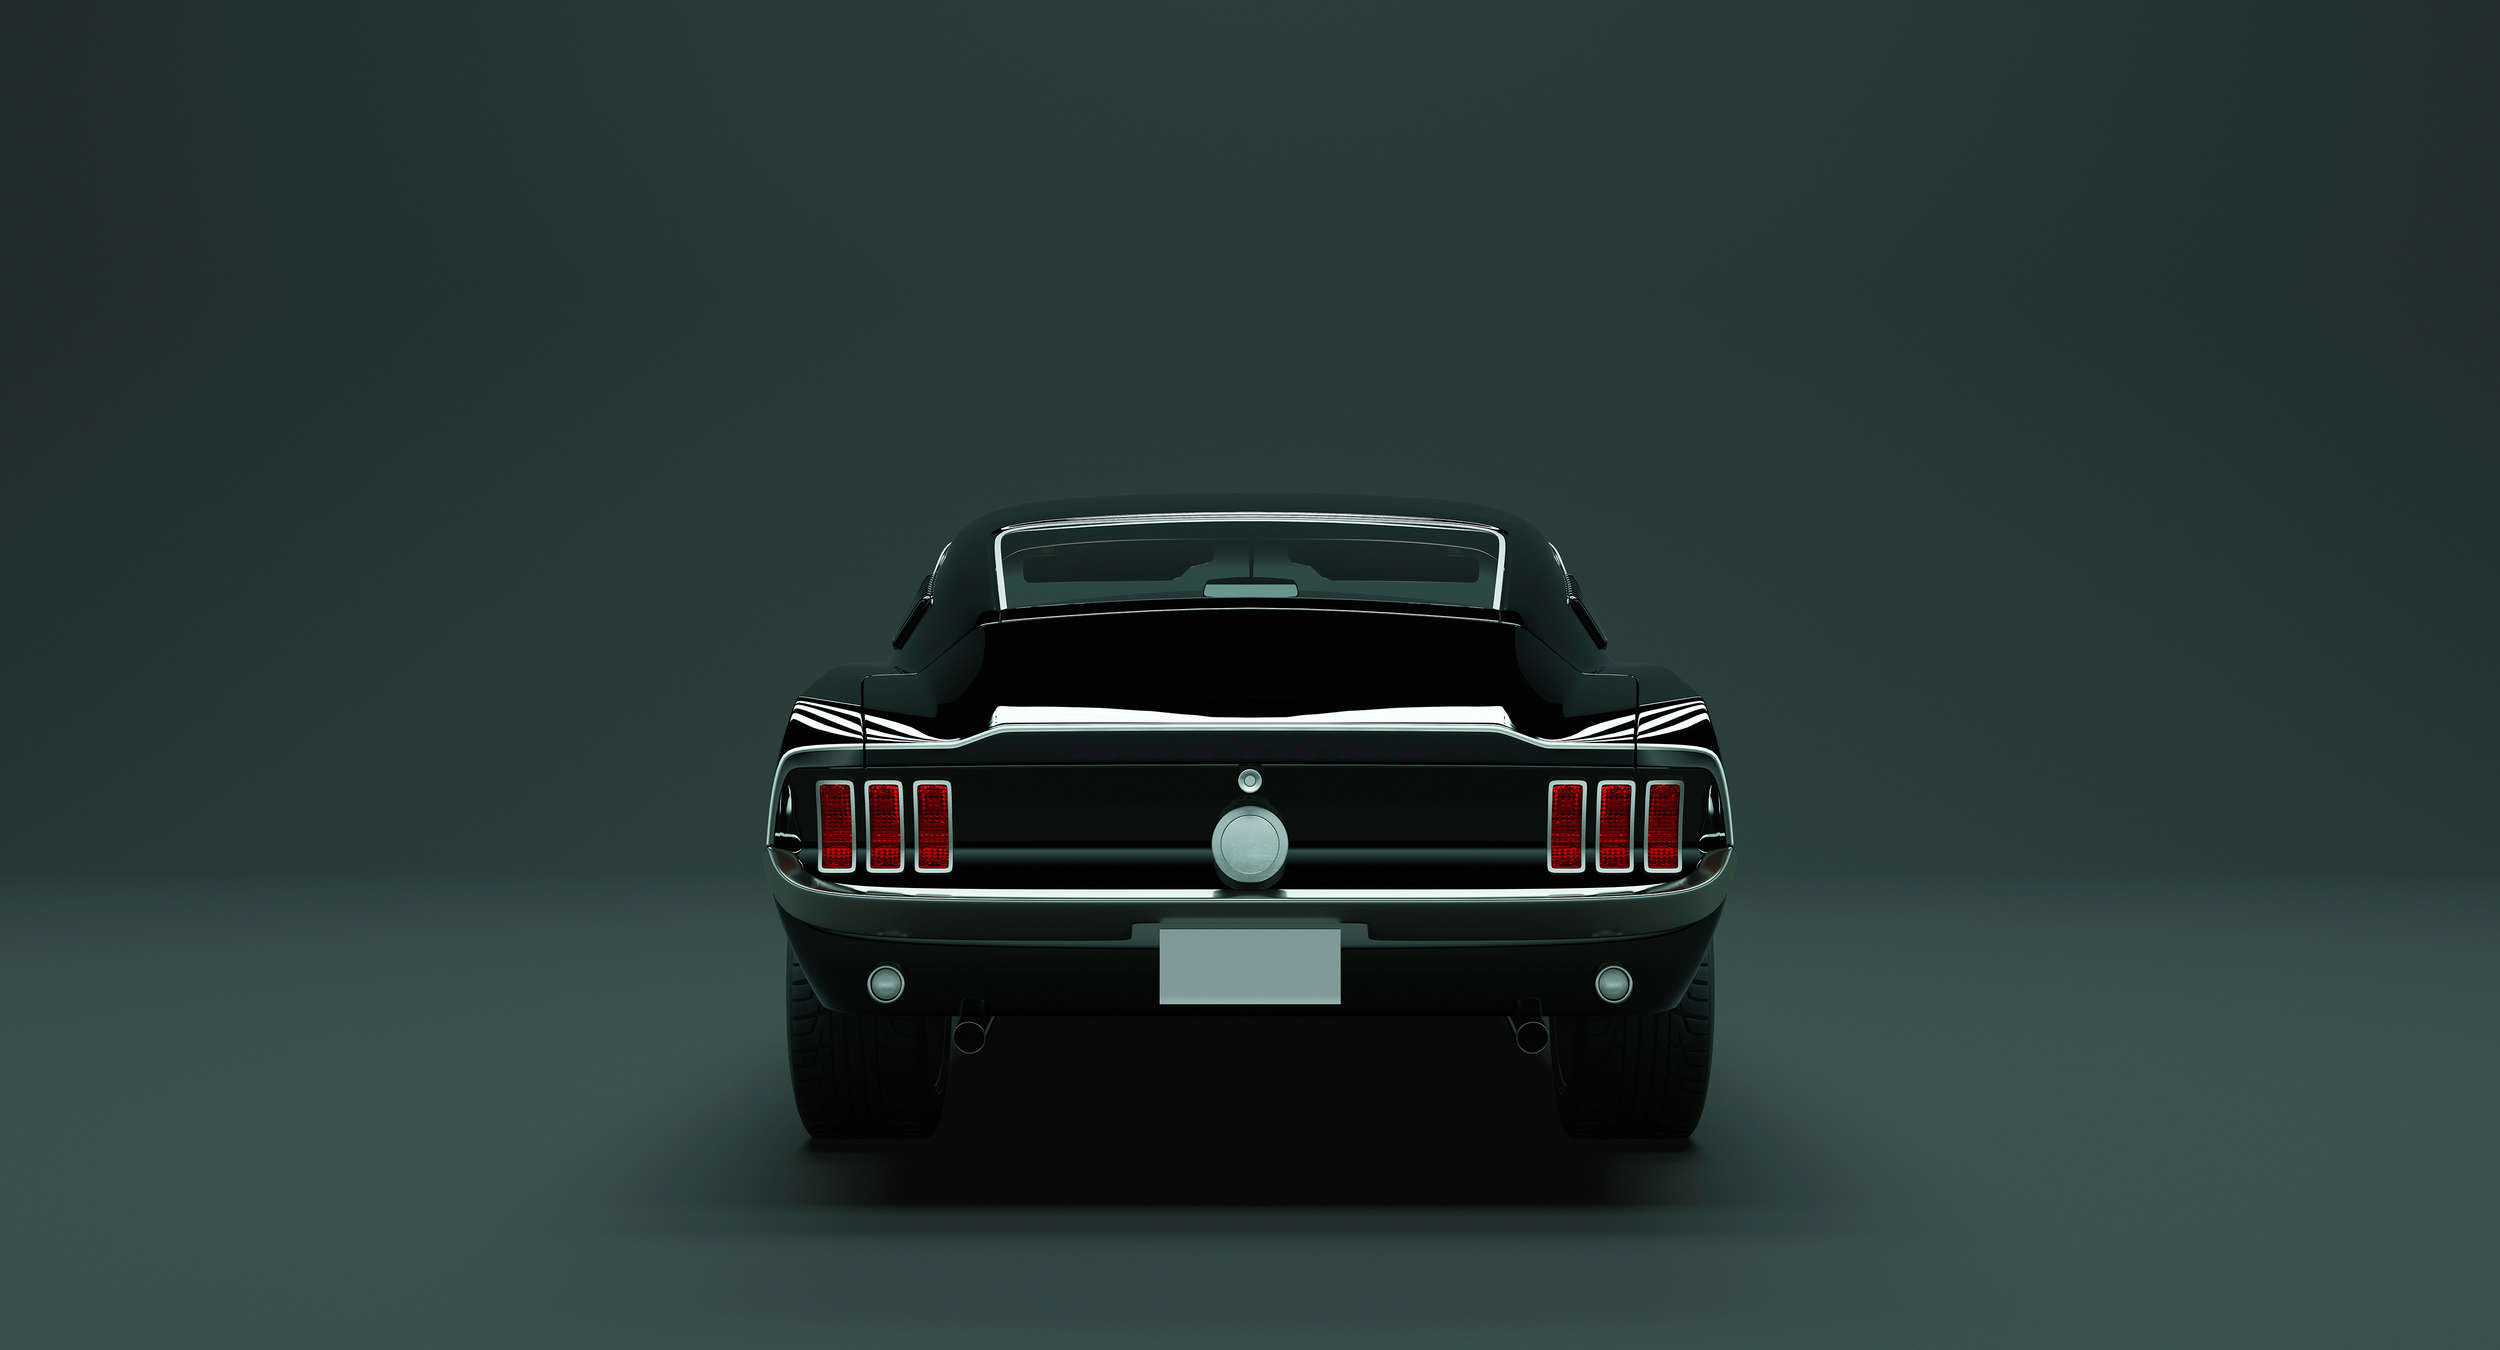             Mustang 3 - American Muscle Car Fototapete – Blau, Schwarz | Mattes Glattvlies
        